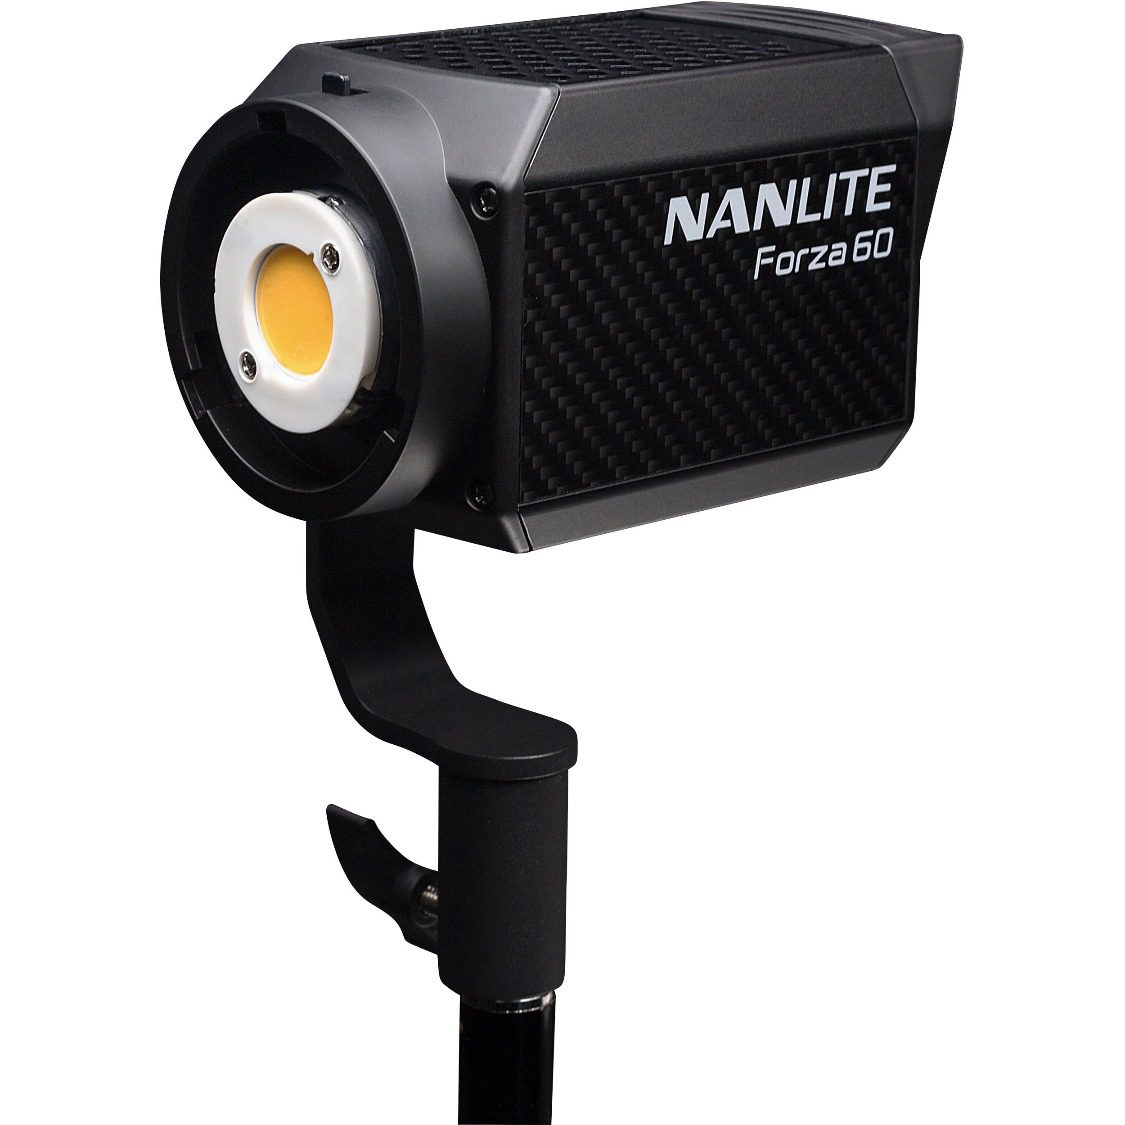 Nanlite Forza 60